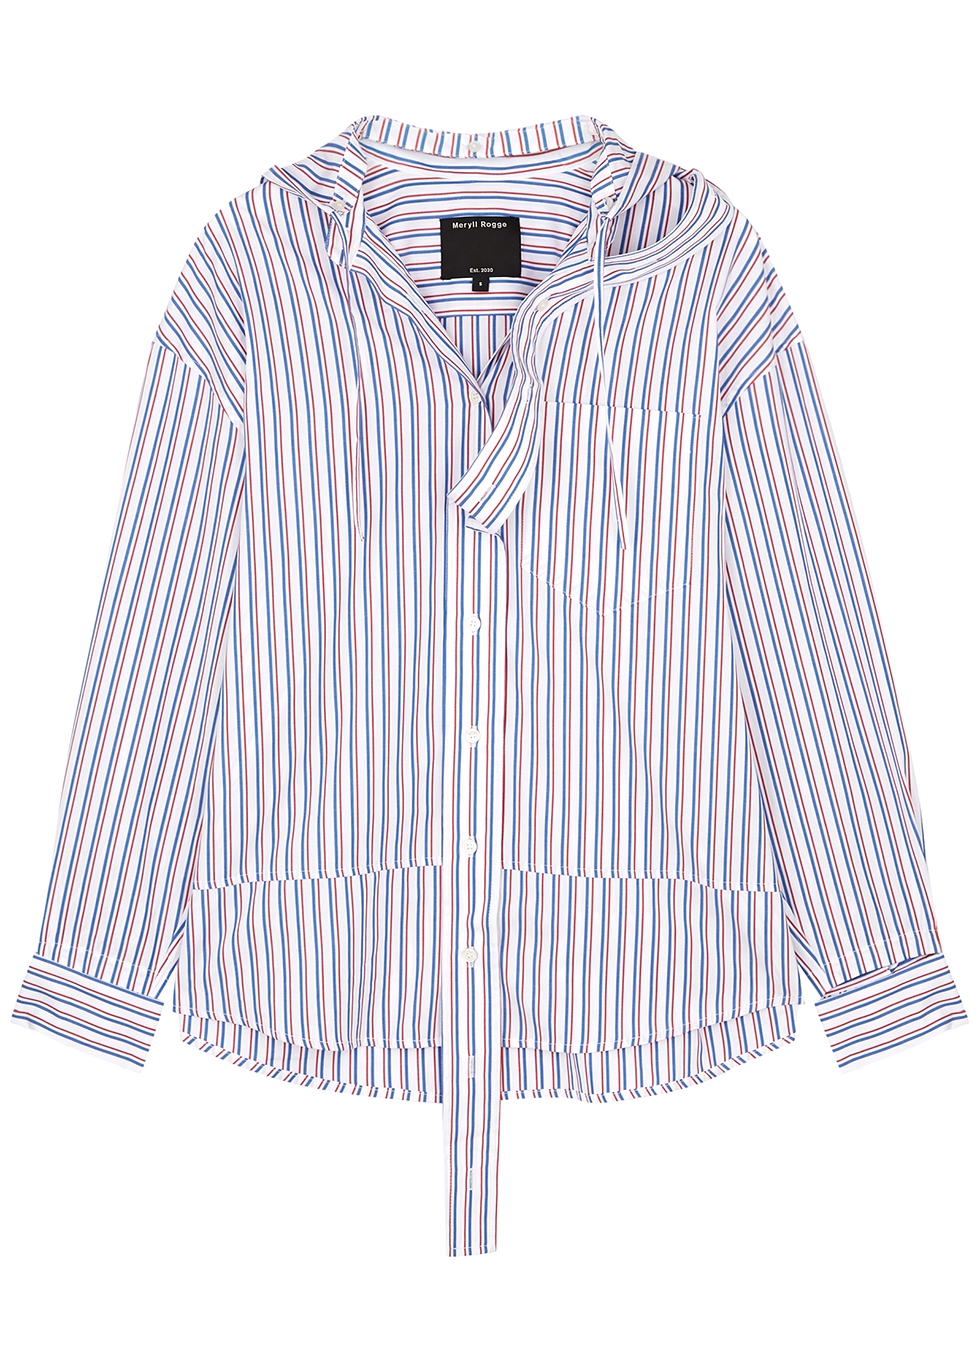 MERYLL ROGGE Striped hooded cotton shirt - Harvey Nichols